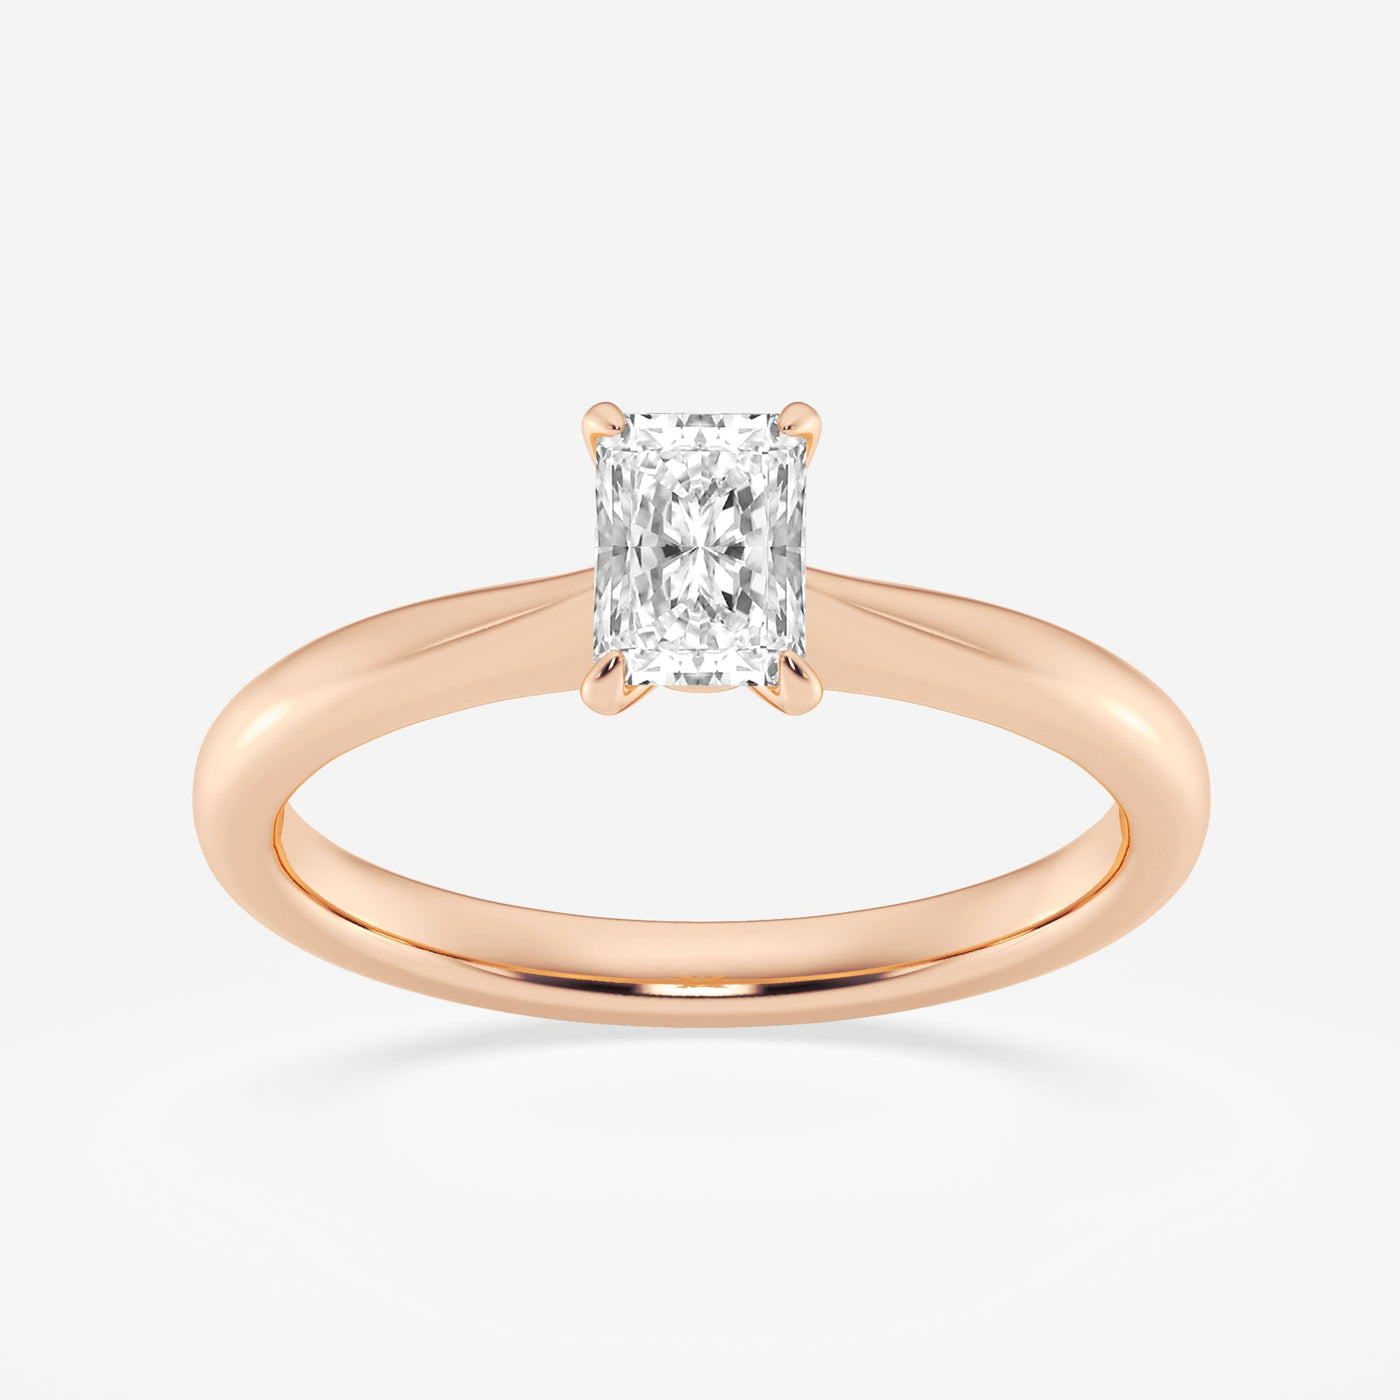 _main_image@SKU:LGR05314X1T50SGP4~#carat_0.50#diamond-quality_fg,-vs2+#metal_18k-rose-gold